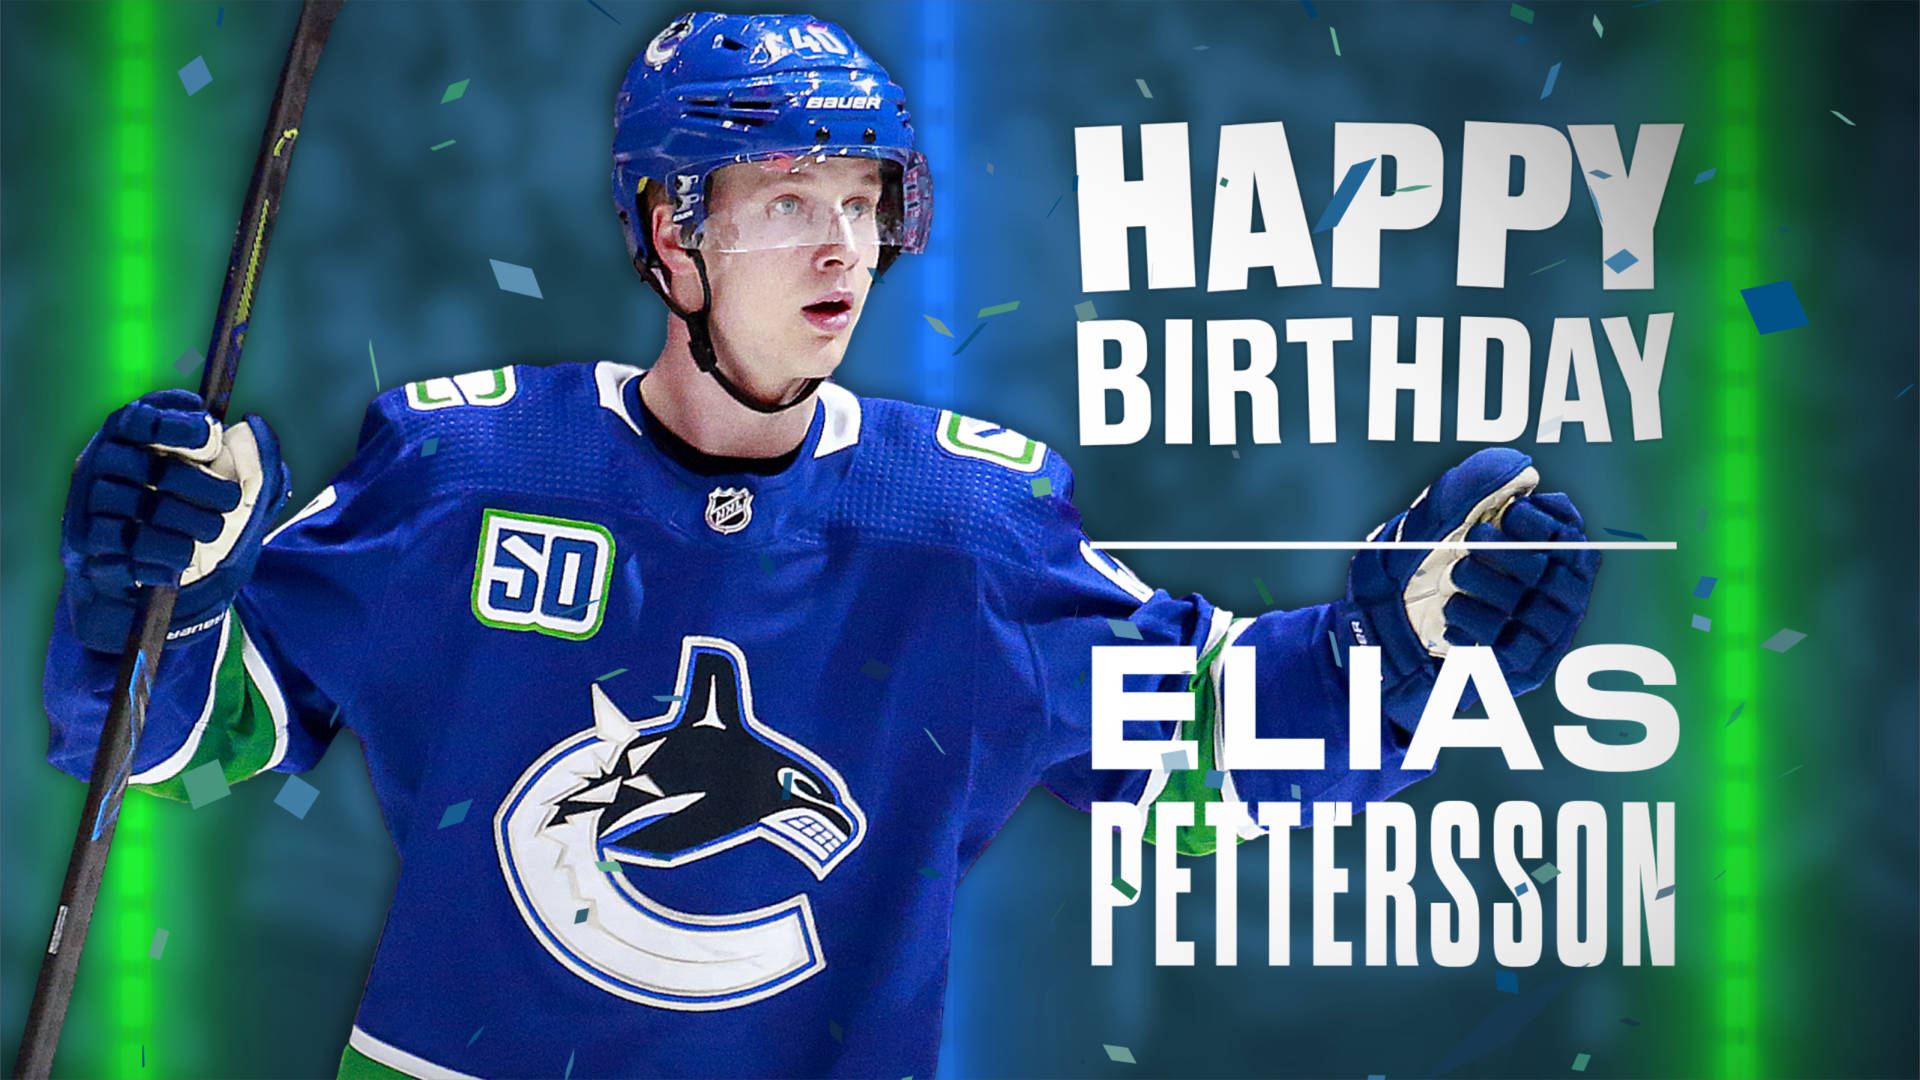 Elias Pettersson Happy Birthday Poster Background